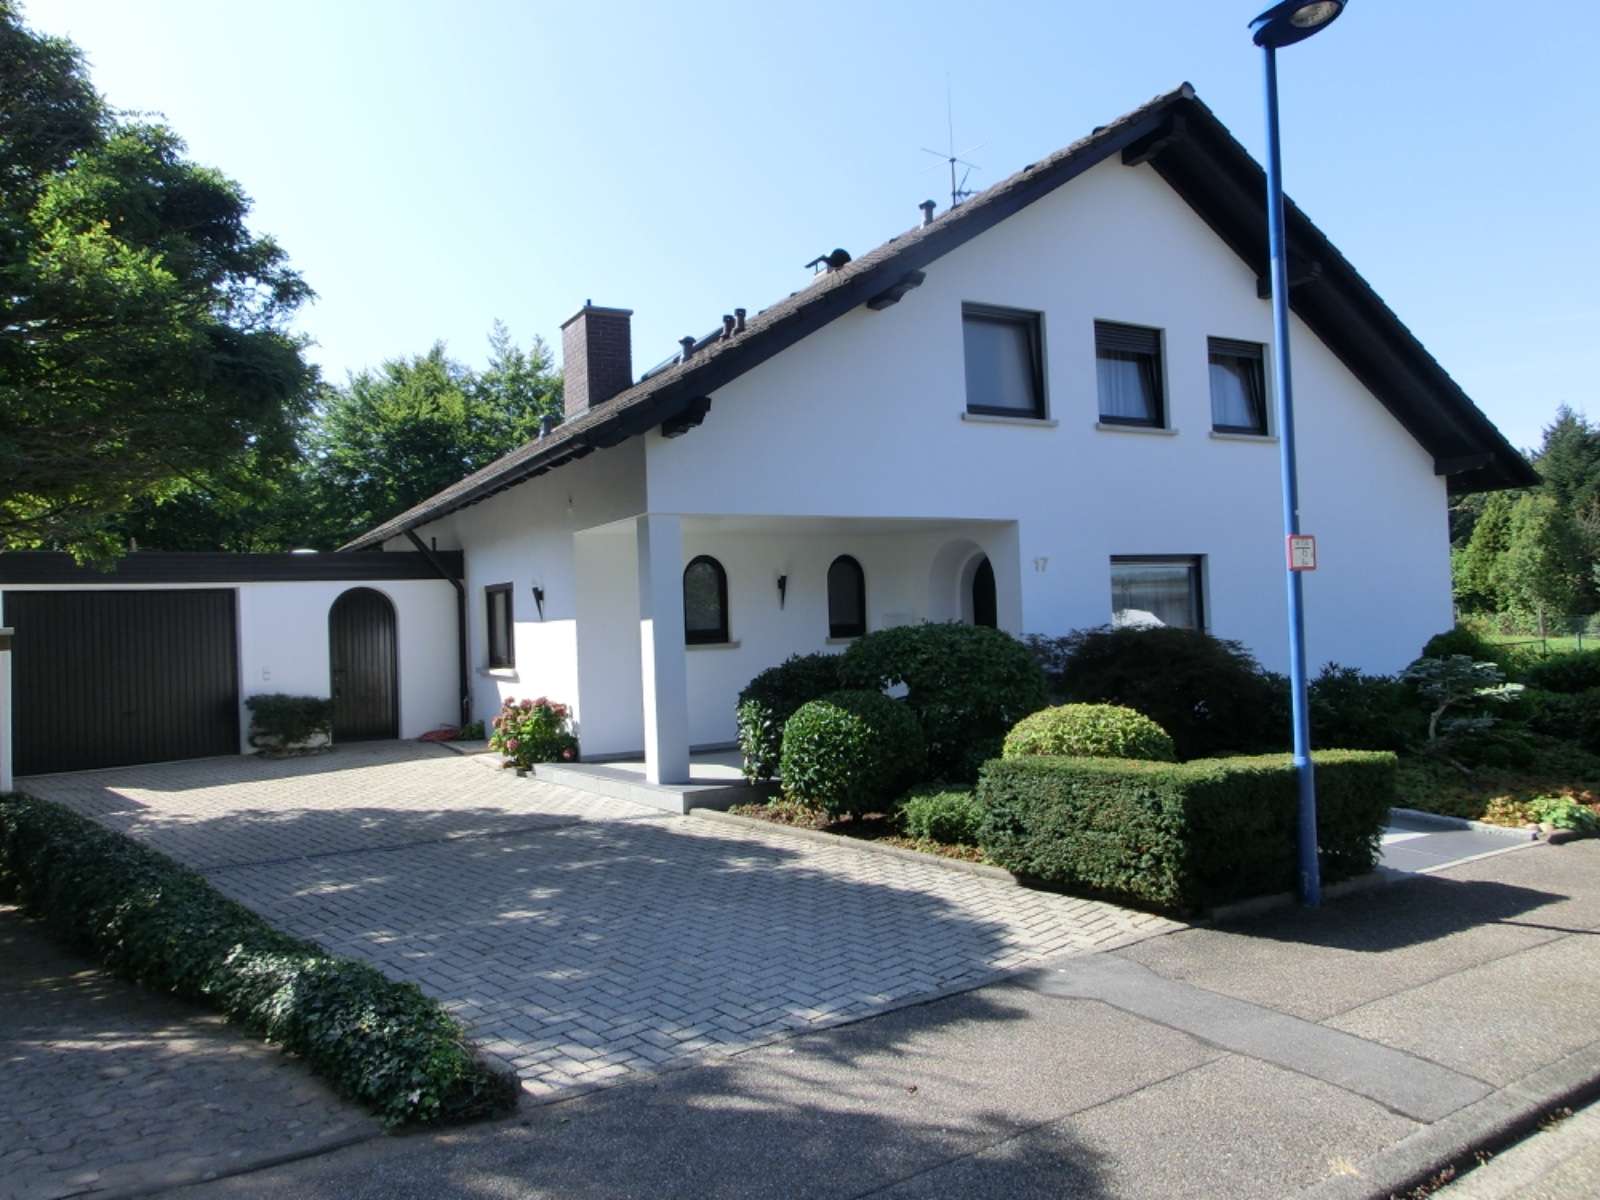 Haus zum Mieten in Waldbronn 2.400,00 € 269 m²